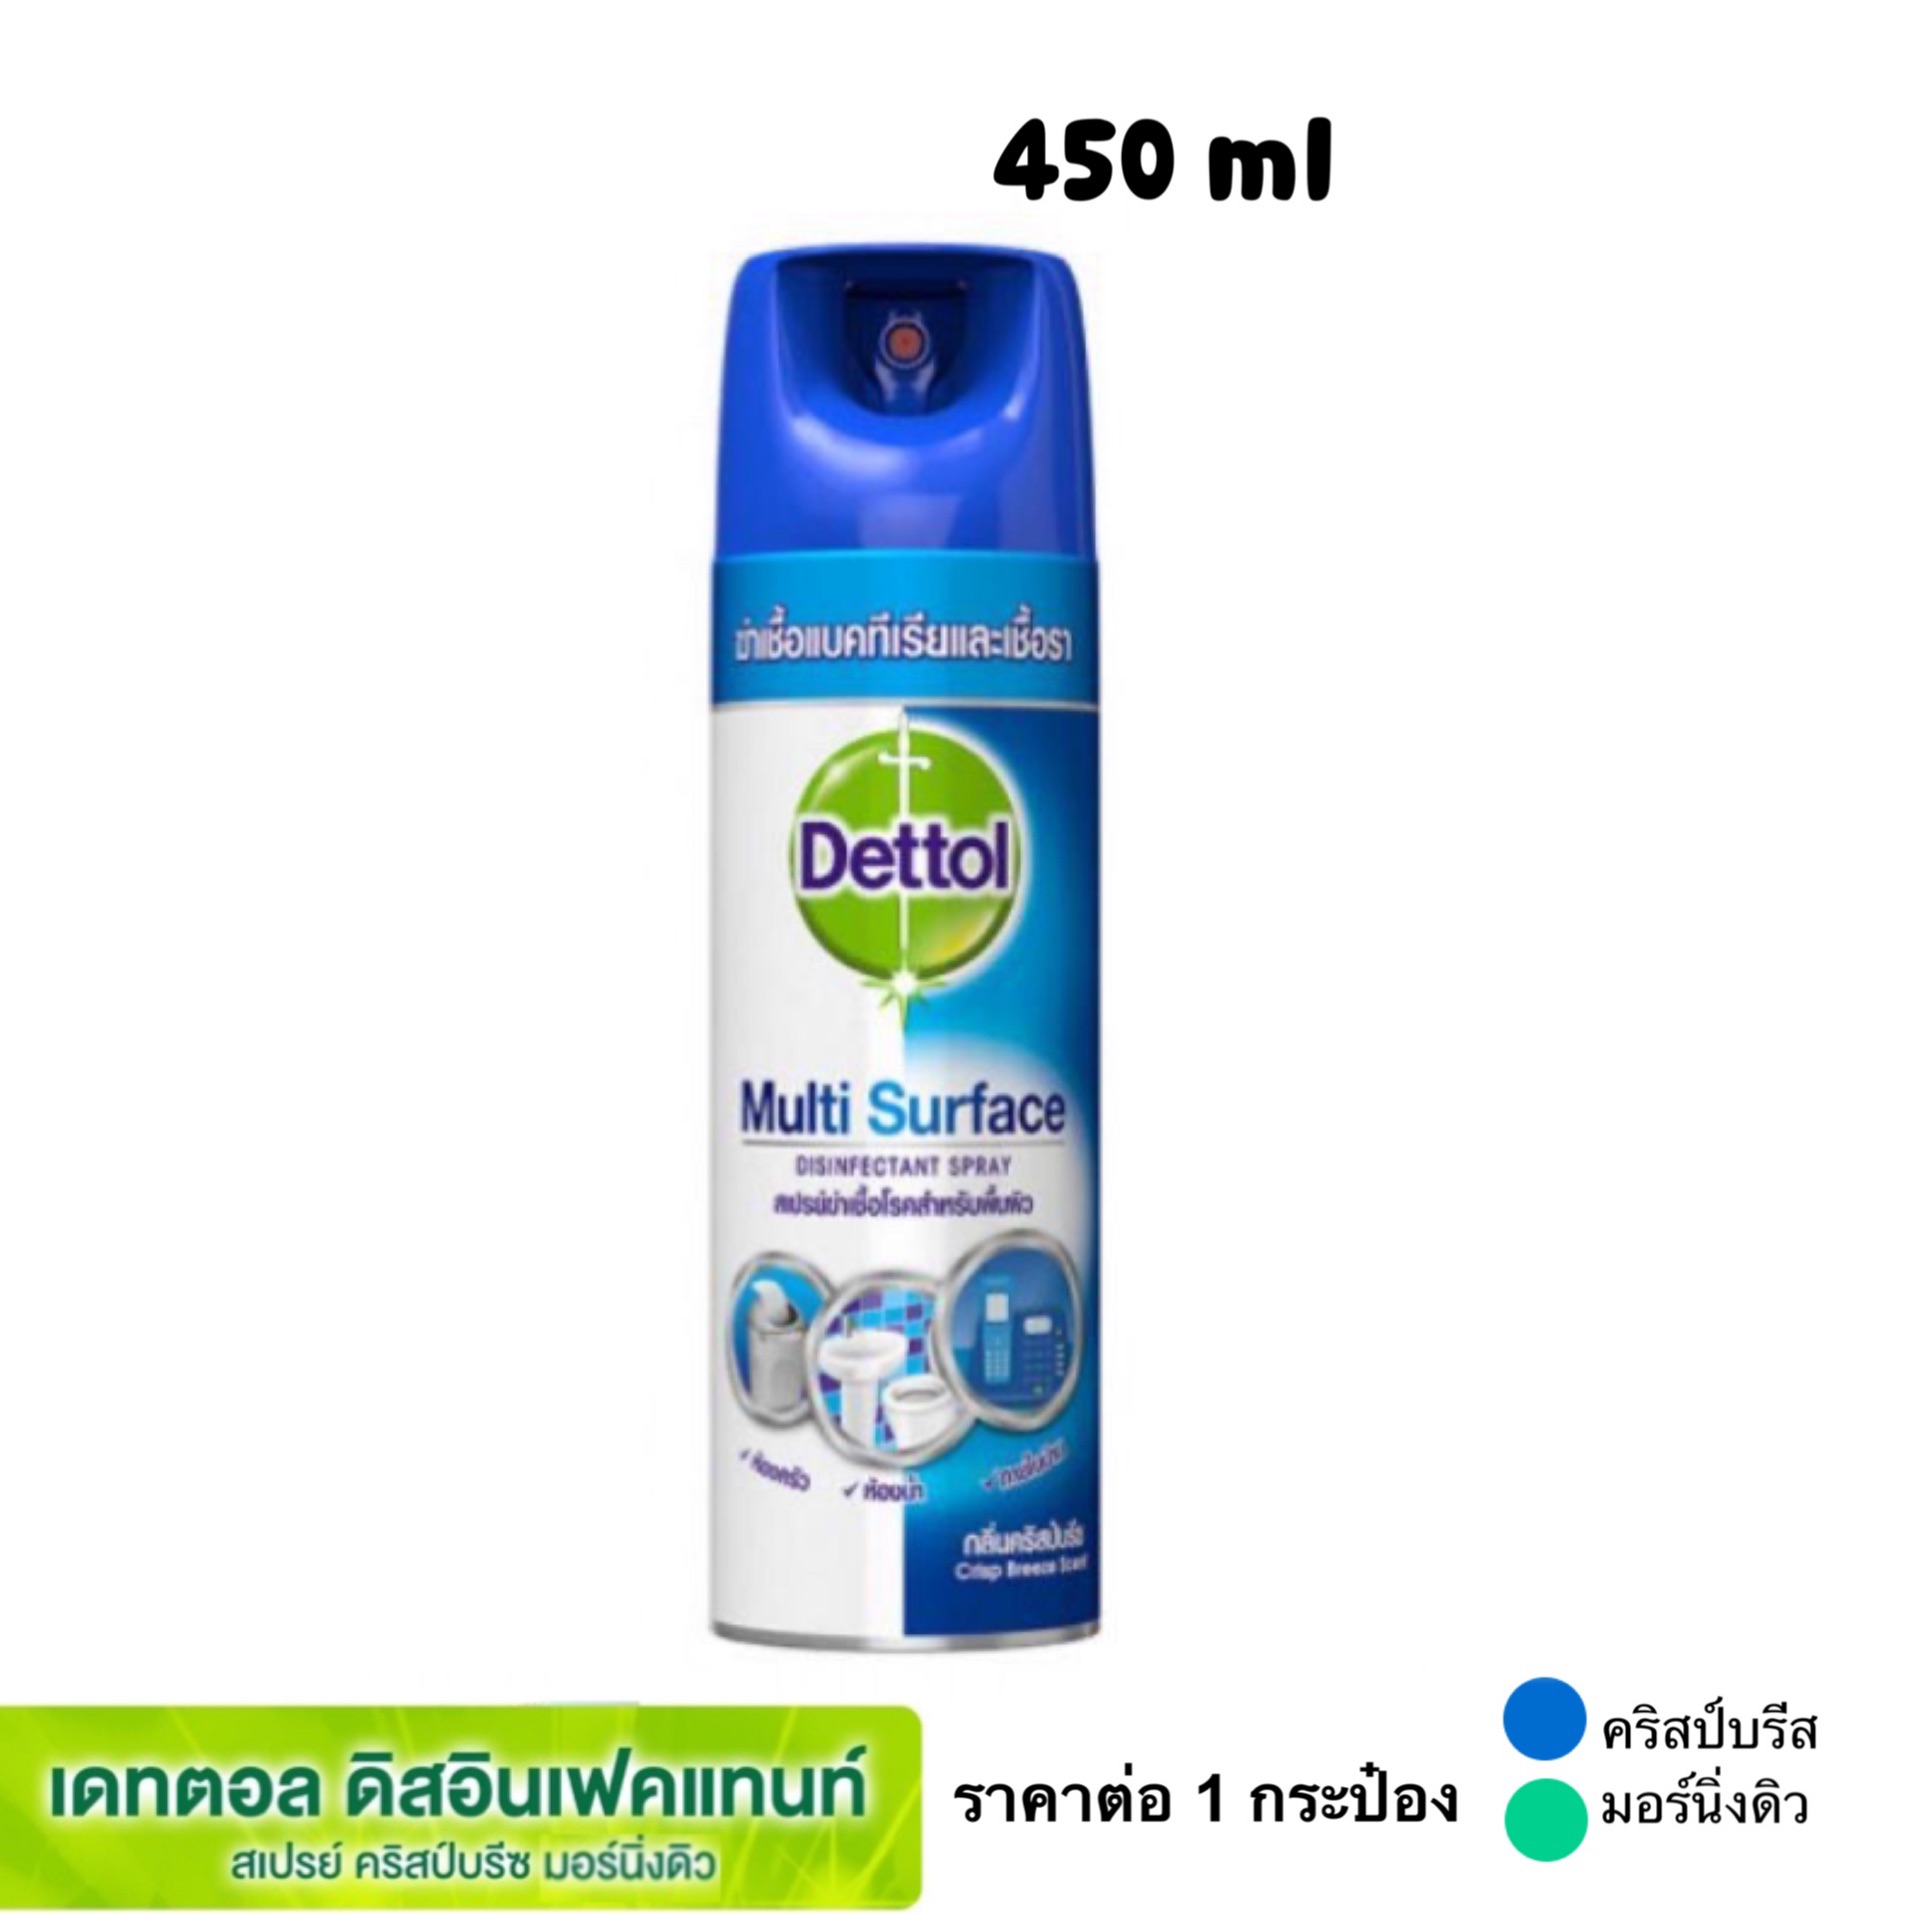 Dettol spray สเปรย์ฆ่าเชื้อ 225 ml , 450 ml  multisurface disinfectant  color คริสป์บรีซ 450 ml